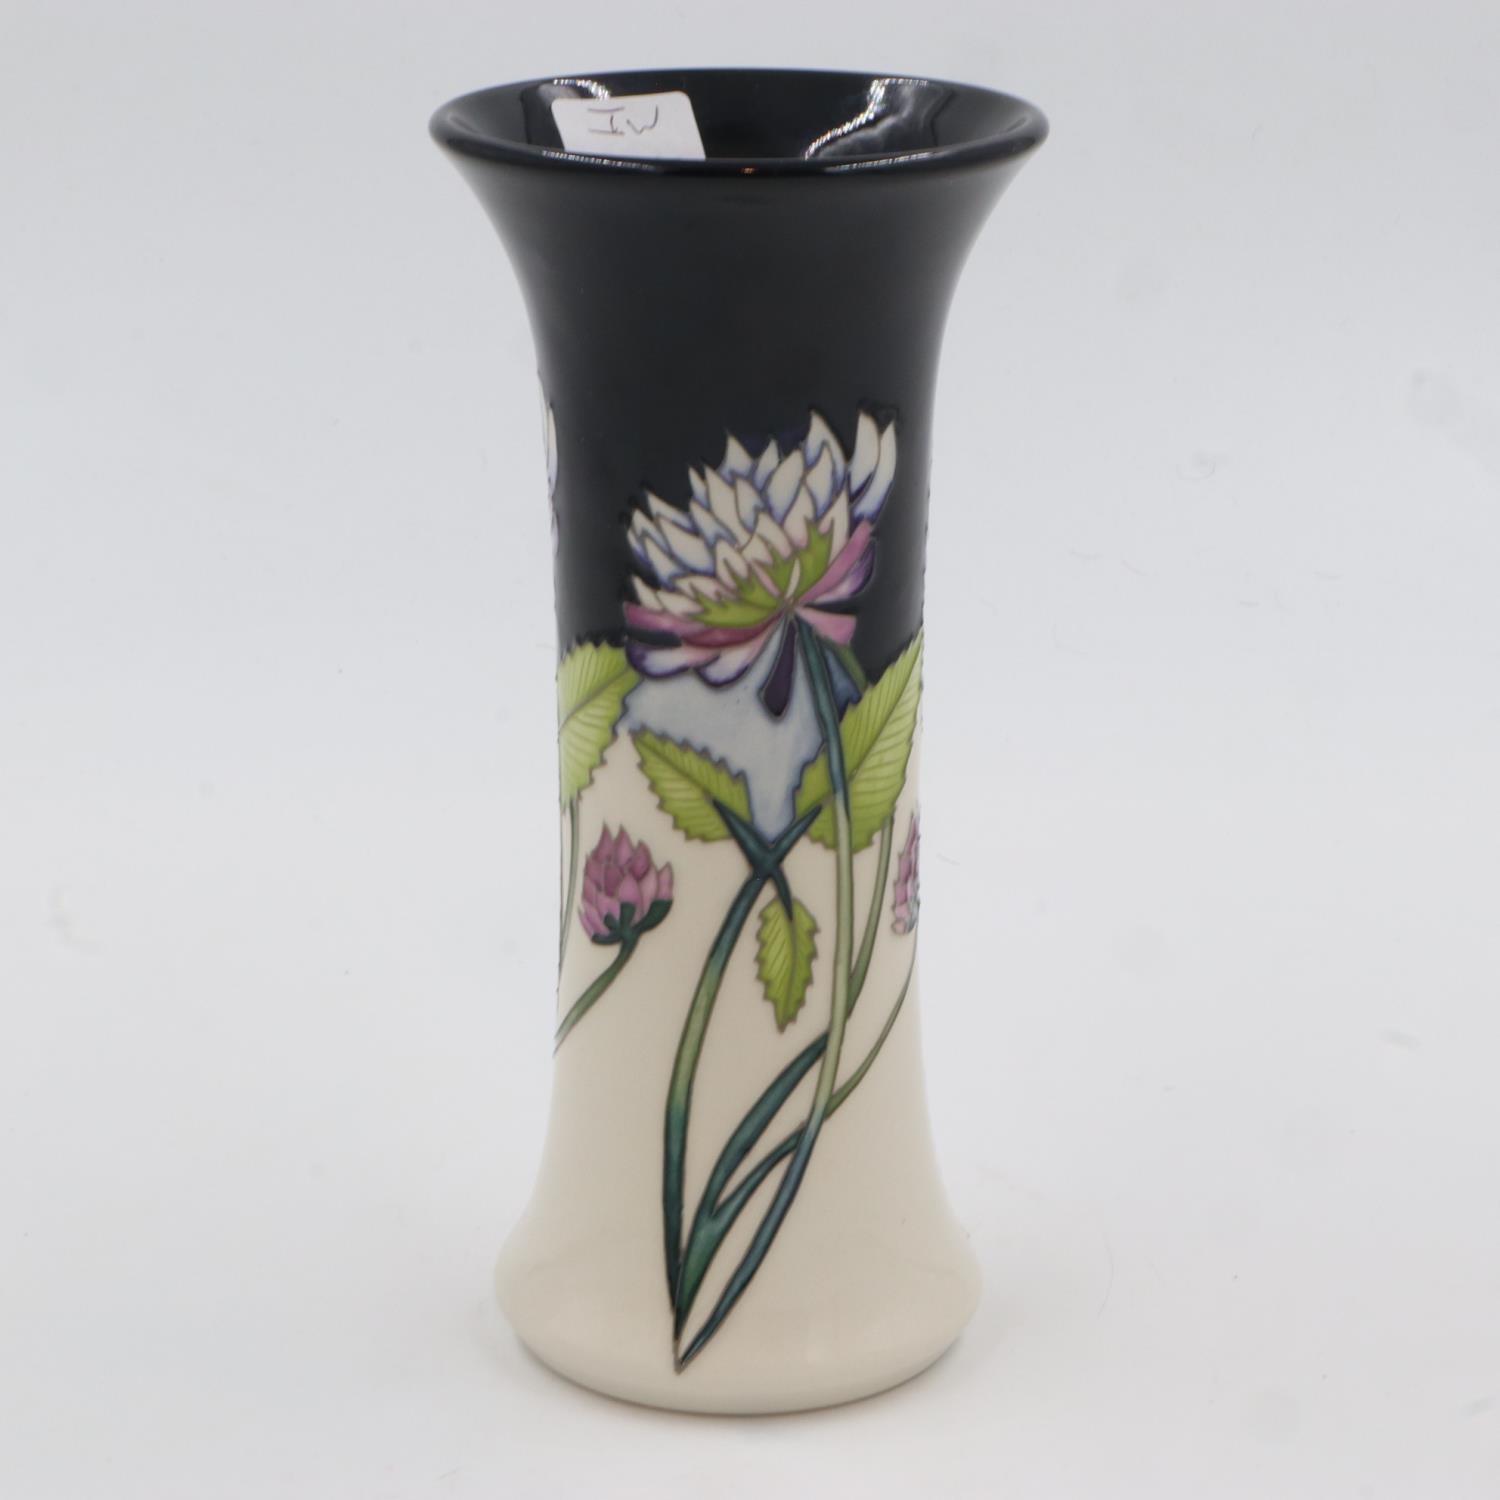 Moorcroft vase in the Trefoil pattern, no chips or cracks, 21cm H. UK P&P Group 1 (£16+VAT for the